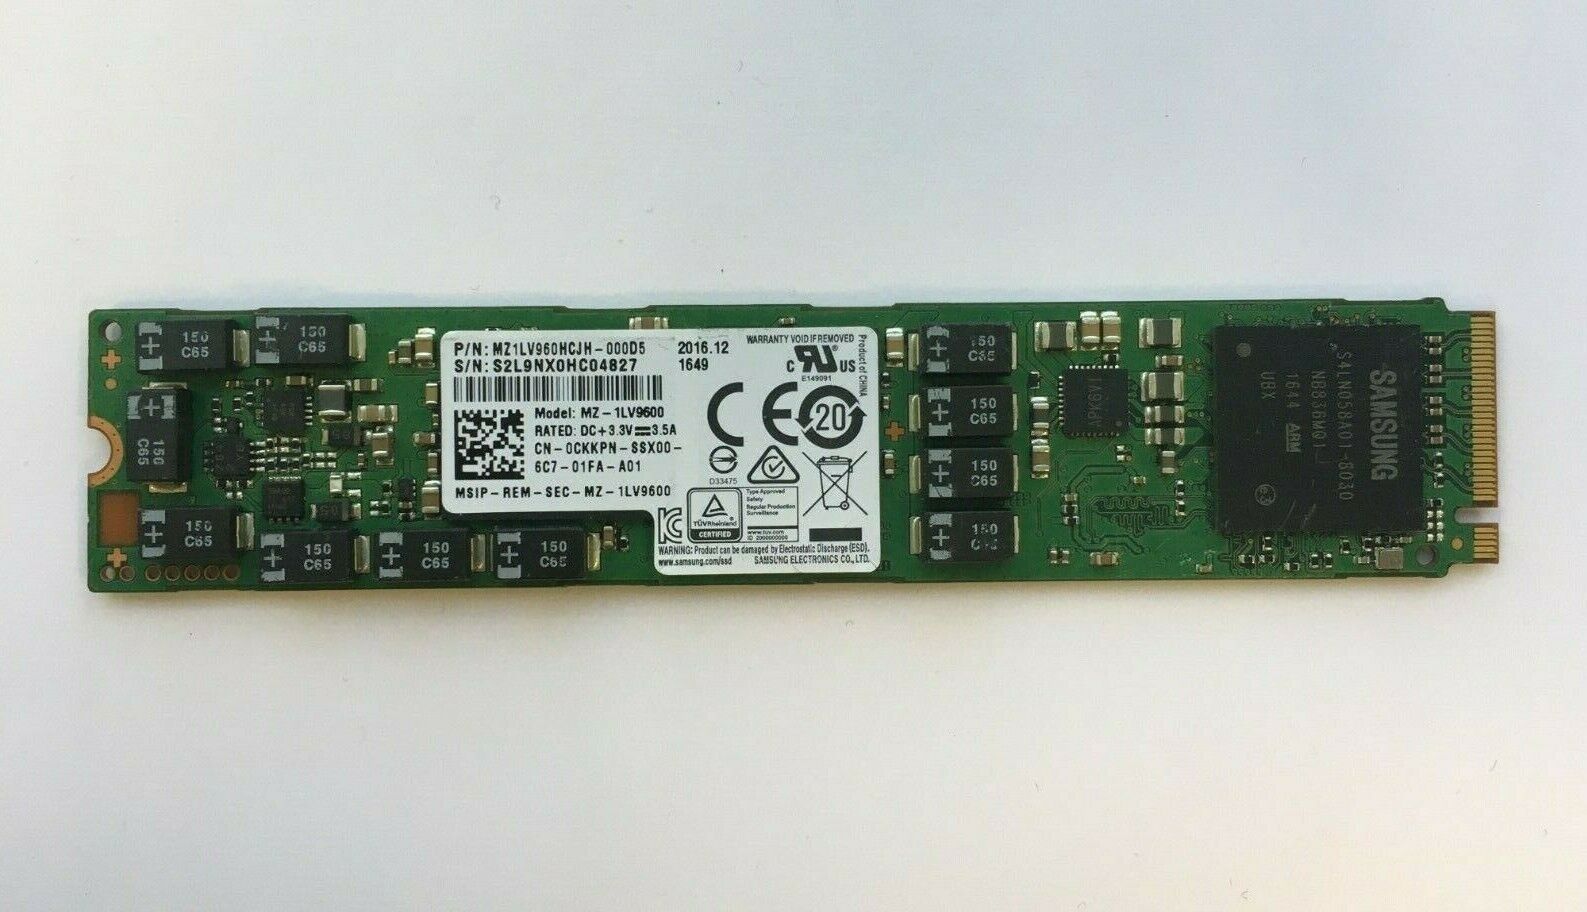 SAMSUNG 960GB PCIe MZ-1LV9600 SSD NVMe 110mm MZ1LV960HCJH